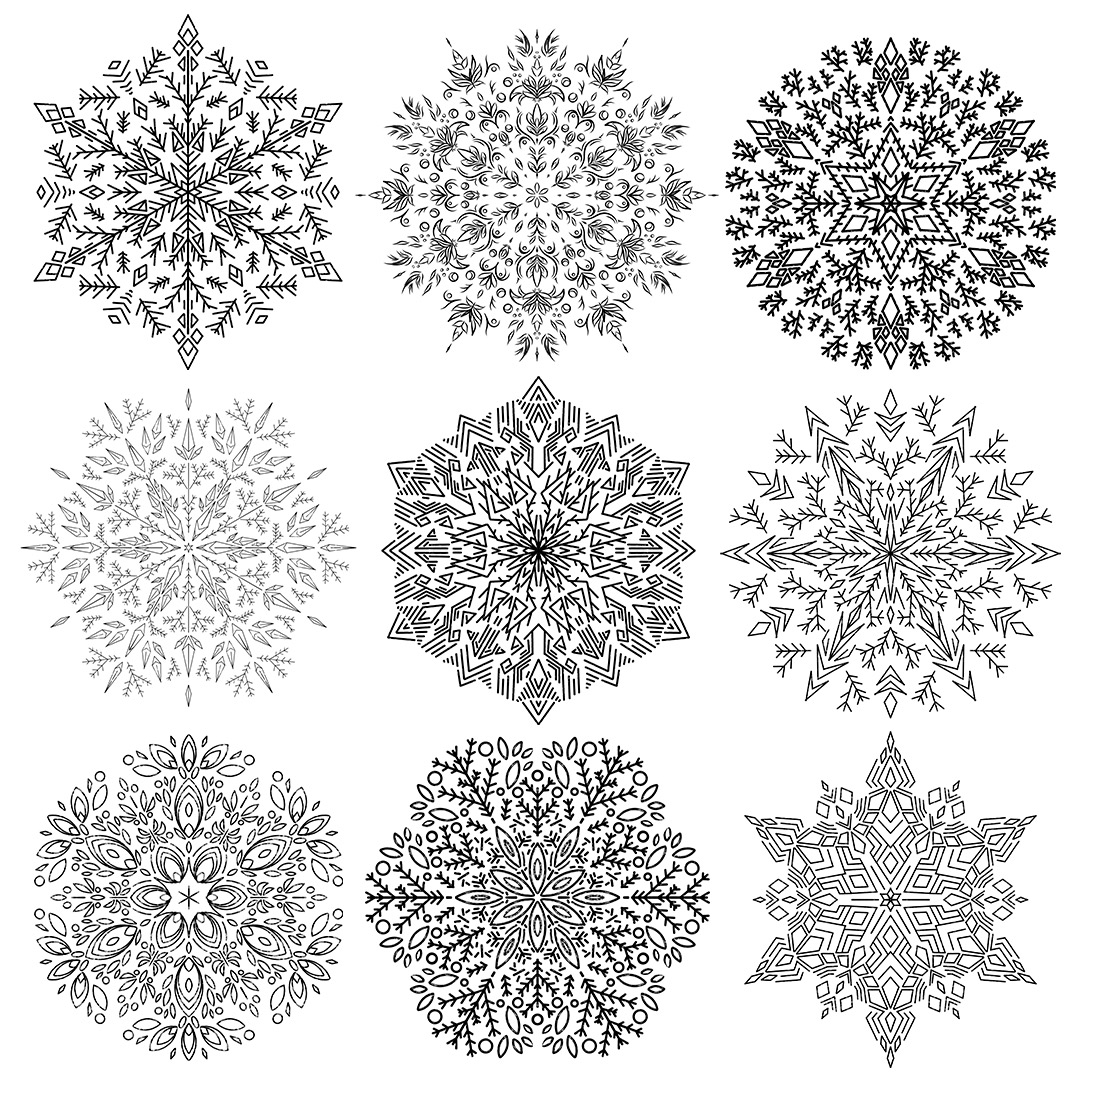 Nice Snowflake Set Design cover image.